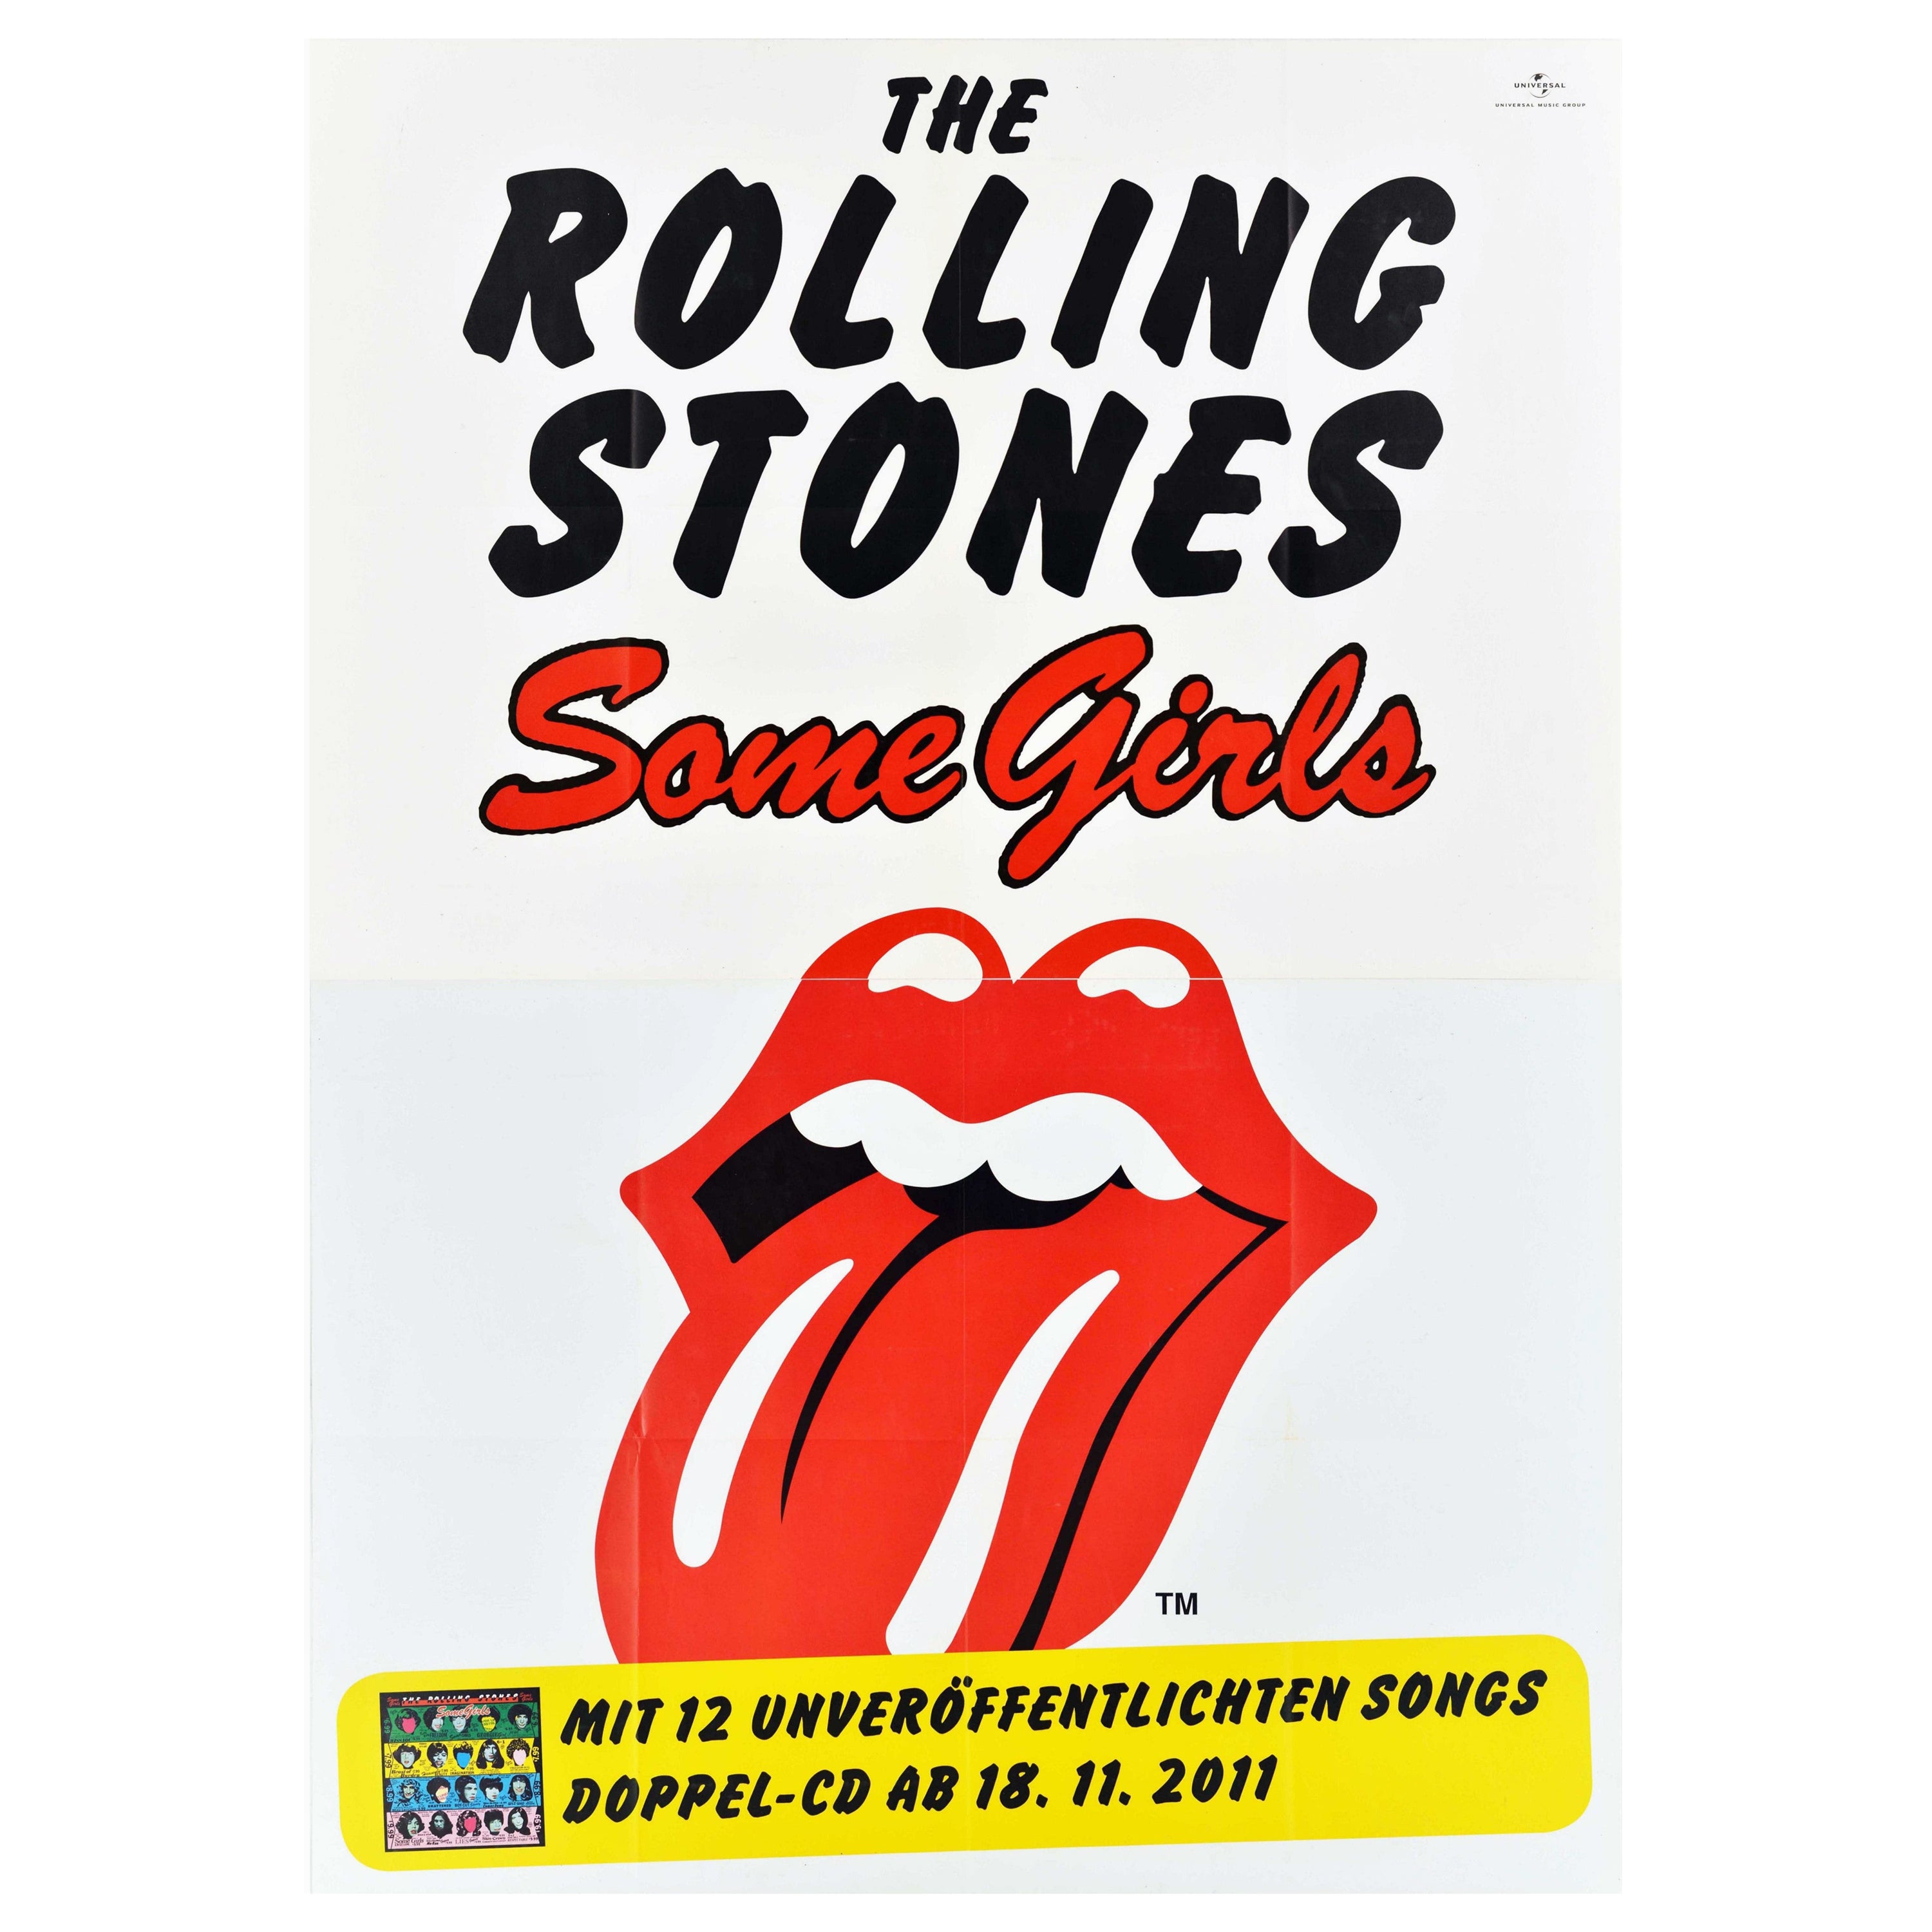 Original-Musikplakat „The Rolling Stones Some Girls“, Studio- Album 2-CD, Hot Lips